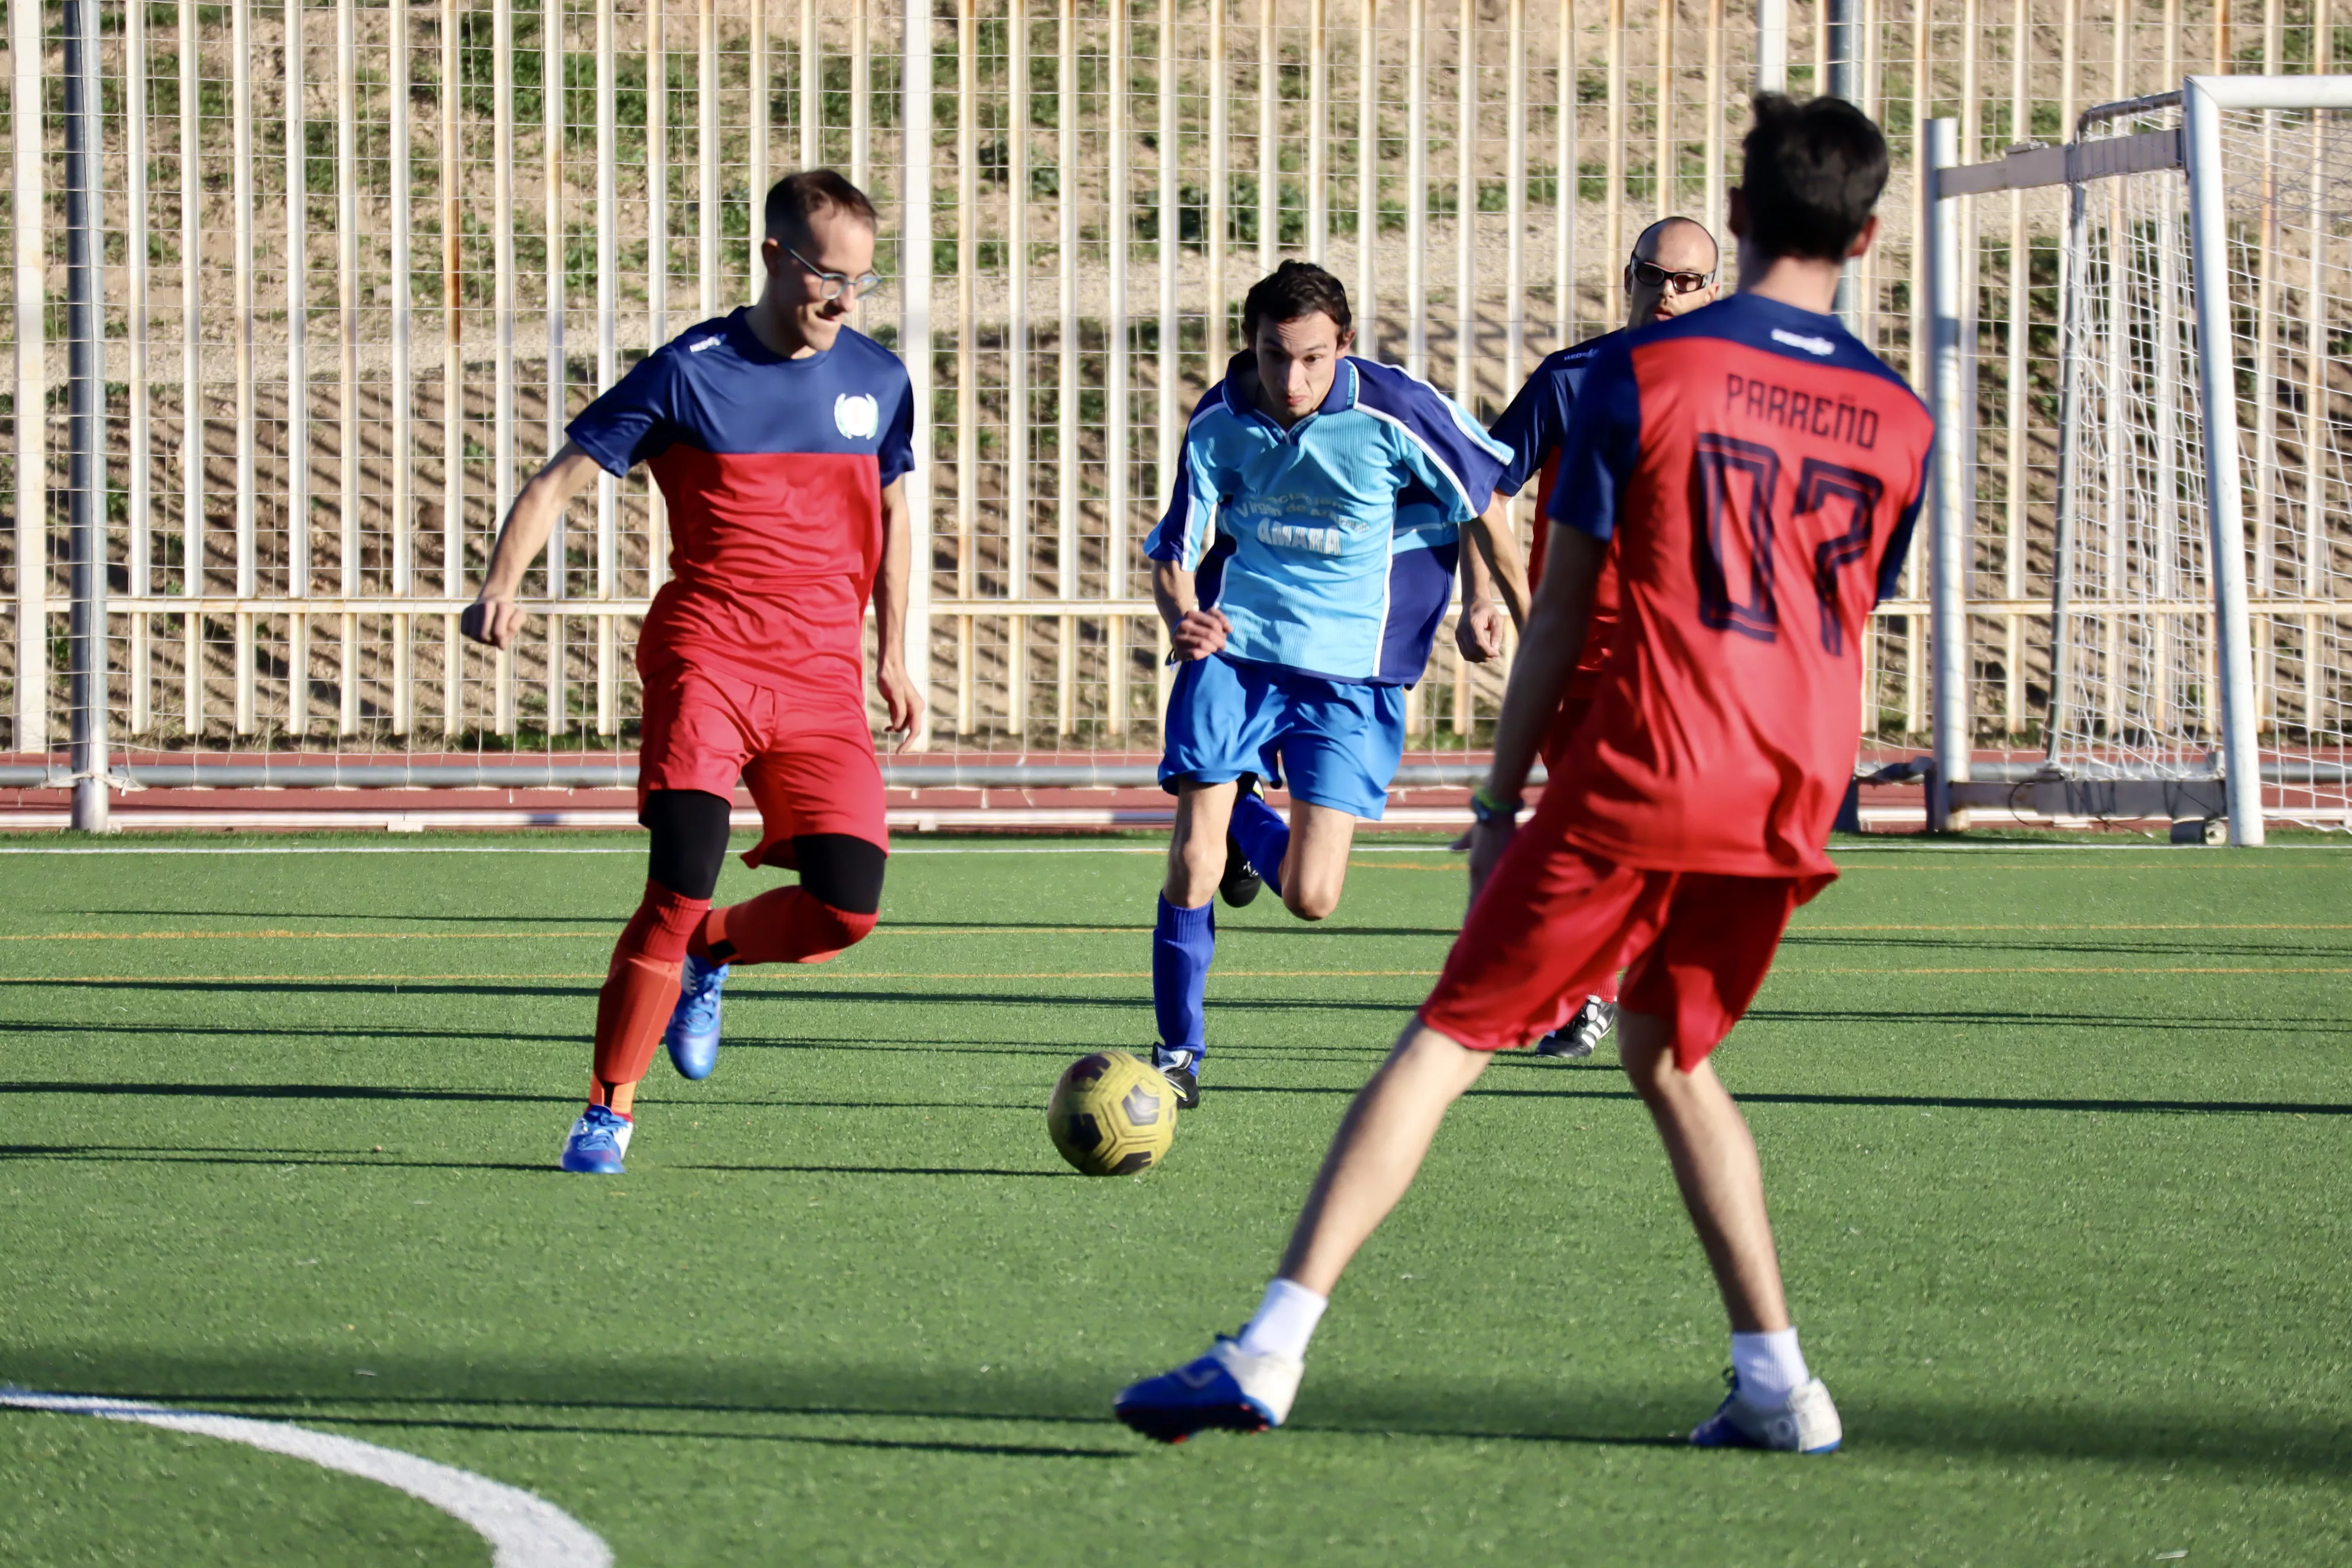 IMG 6680Campeonato Andaluz de Fútbol 7 FANDDI en Lucena